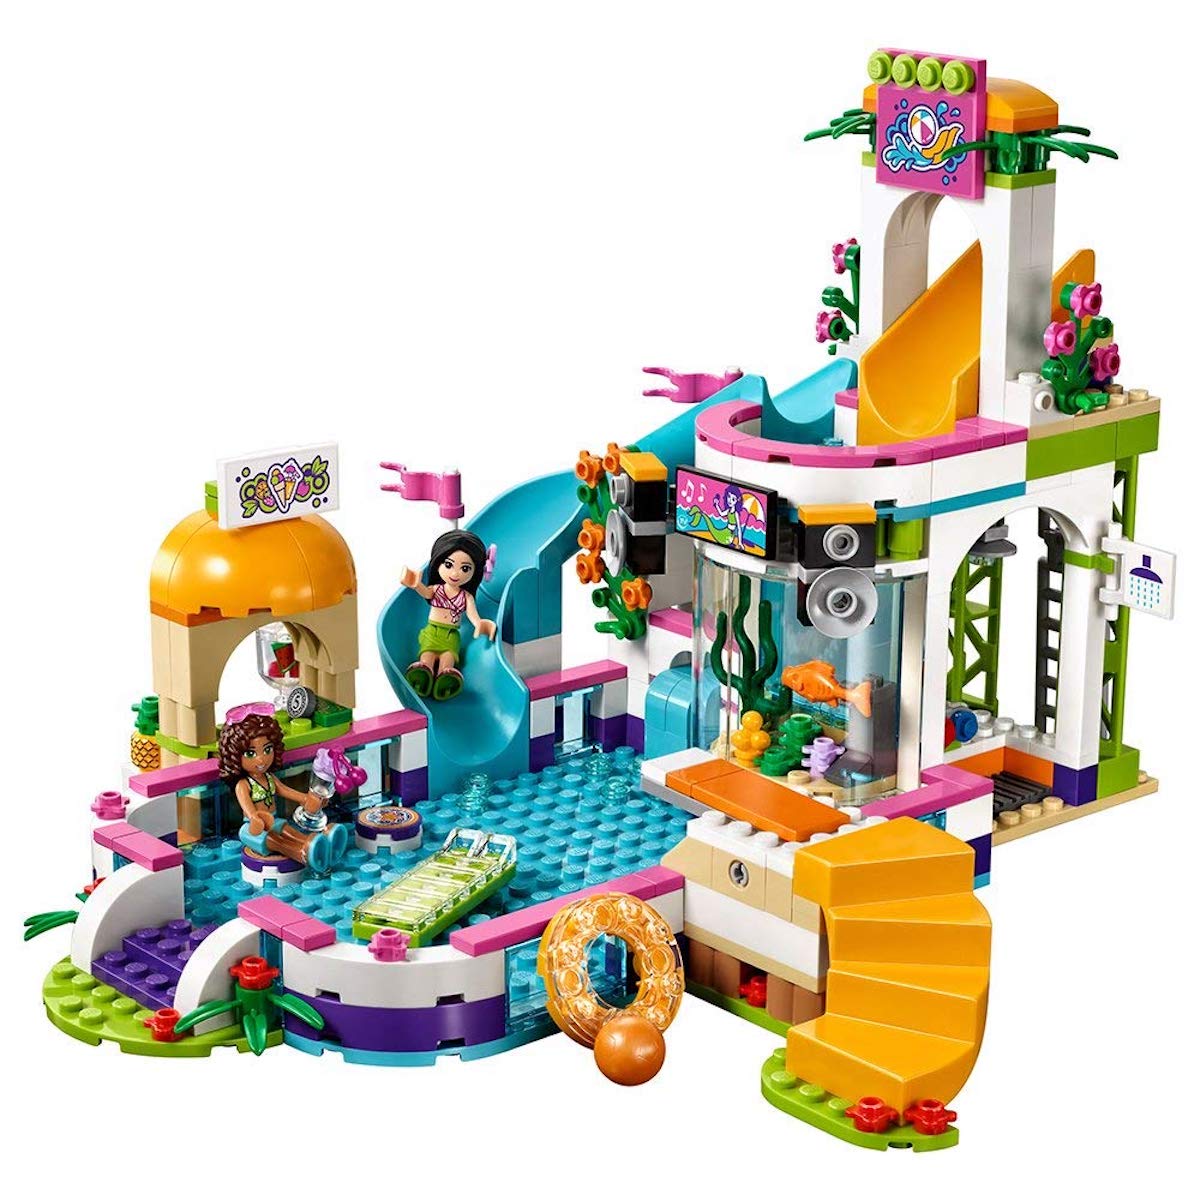 stock image of LEGO Friends Heartlake Summer Pool Set